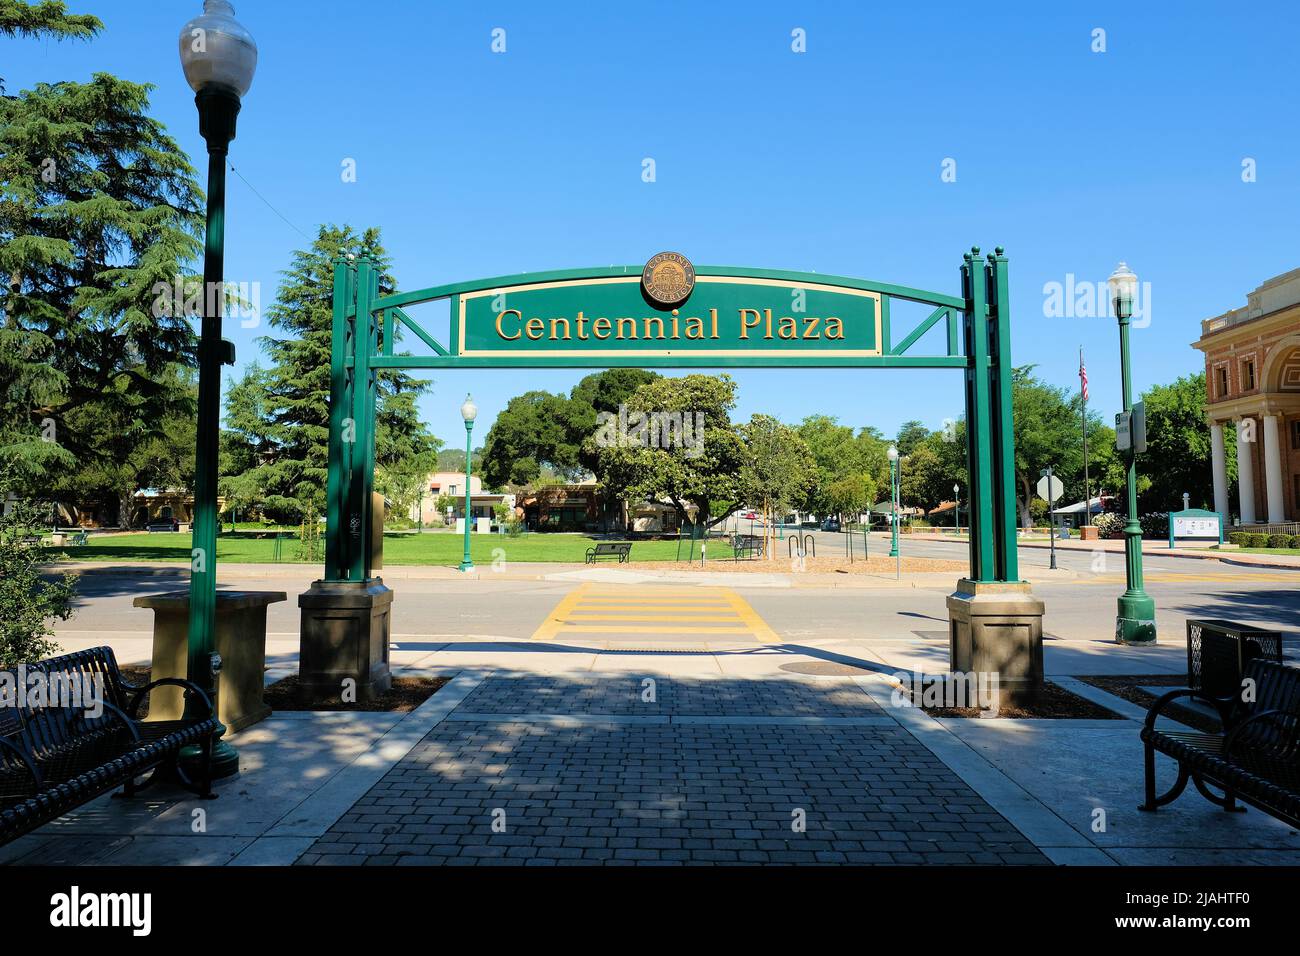 Centennial Plaza archway across from the Sunken Gardens in downtown Atascadero, California, USA. Stock Photo